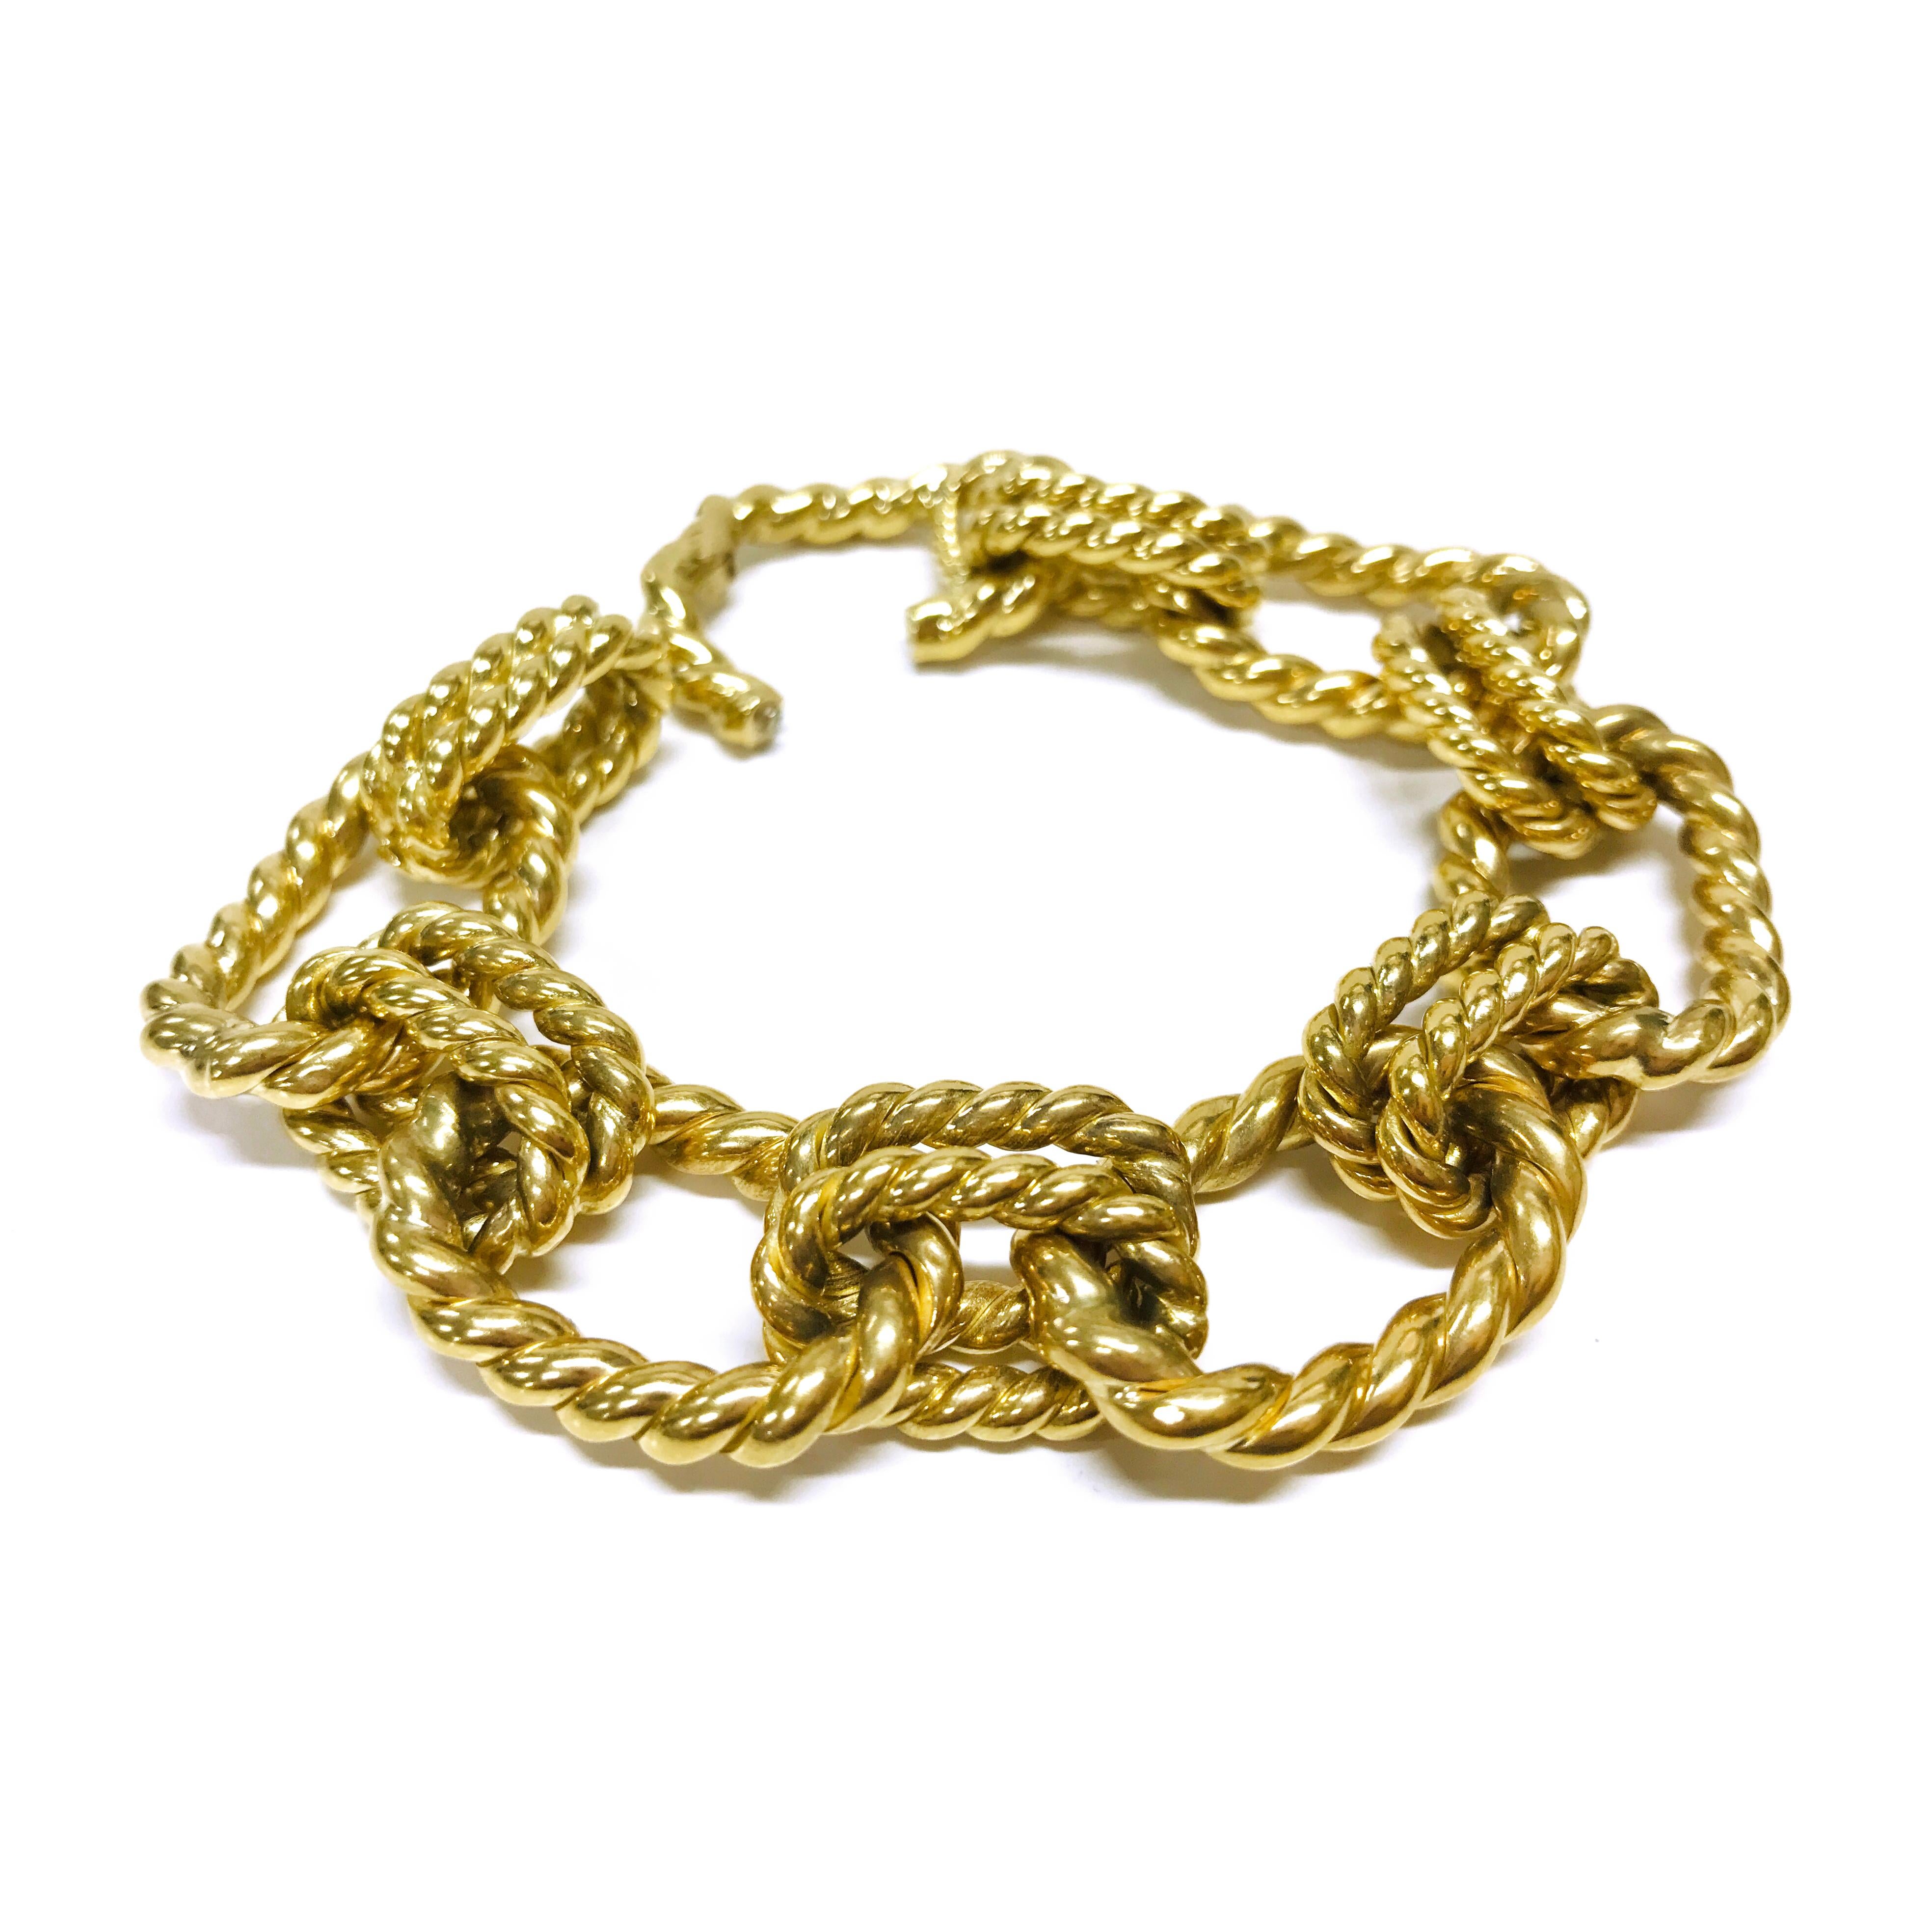 18 Karat Rope Oval Link Bracelet. This bracelet features six oval 18 x 29mm links and twelve oval 13 x 21mm links. The bracelet is 8